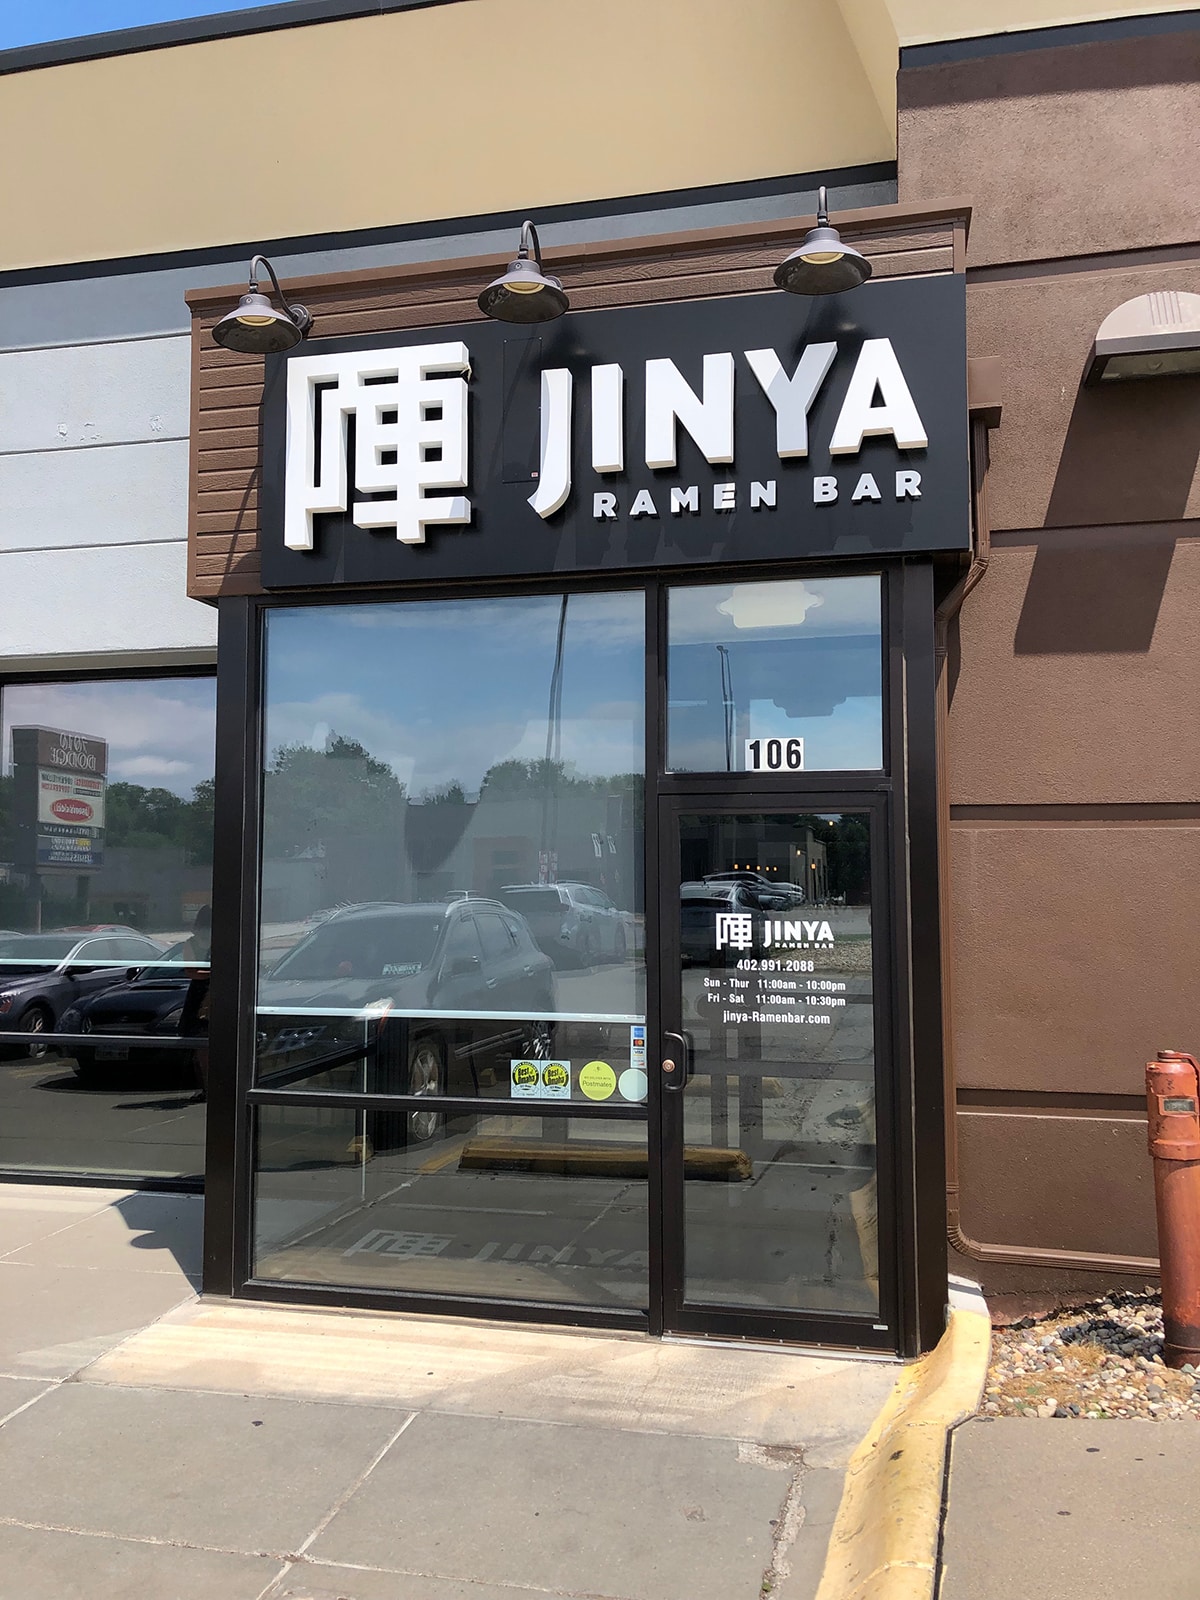 Exterior JINYA Ramen Bar in Omaha, Nebraska.